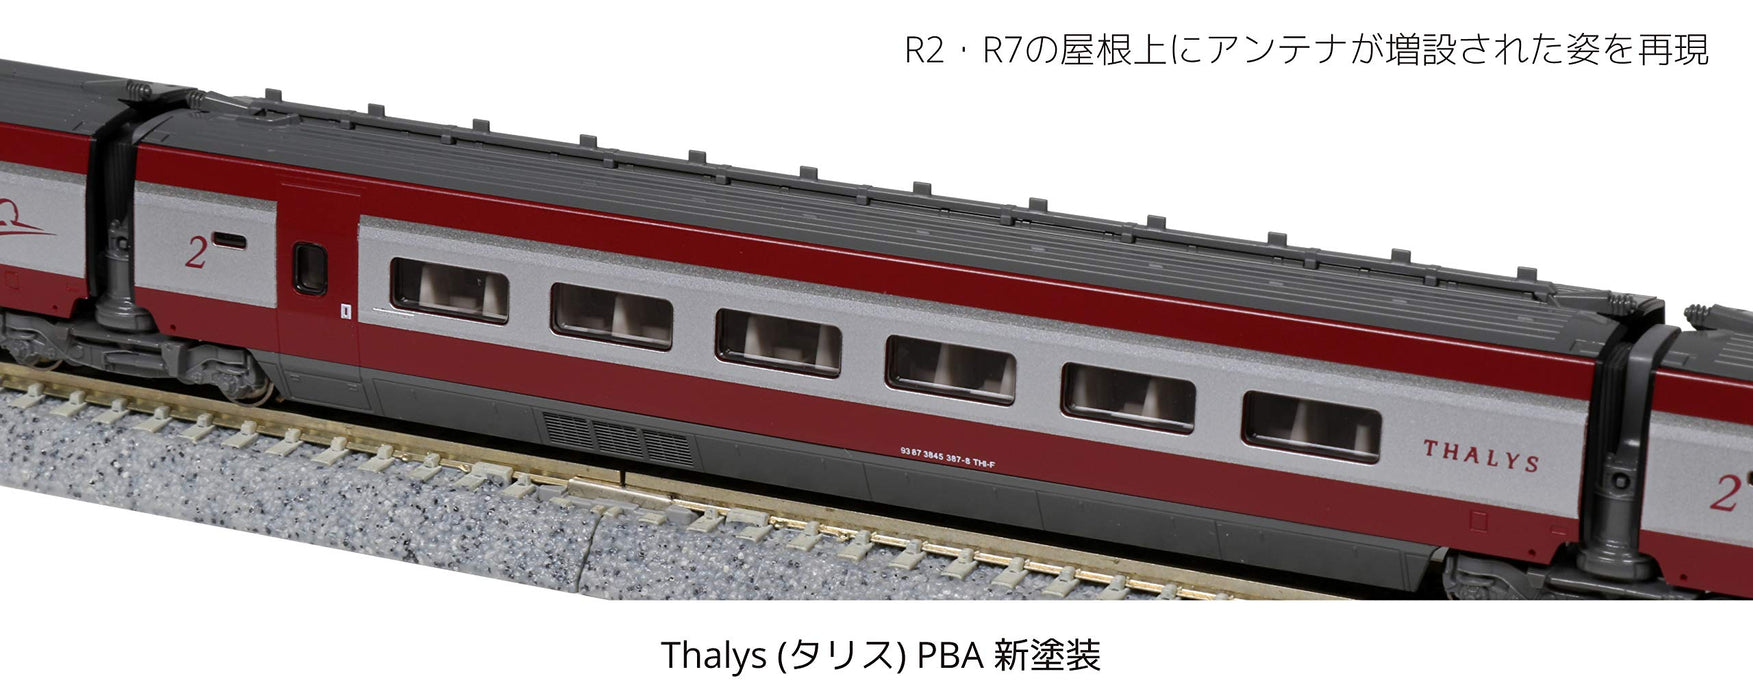 Kato N Gauge 10-Car Set Thalys Pba New Paint 10-1657 Railway Model Train